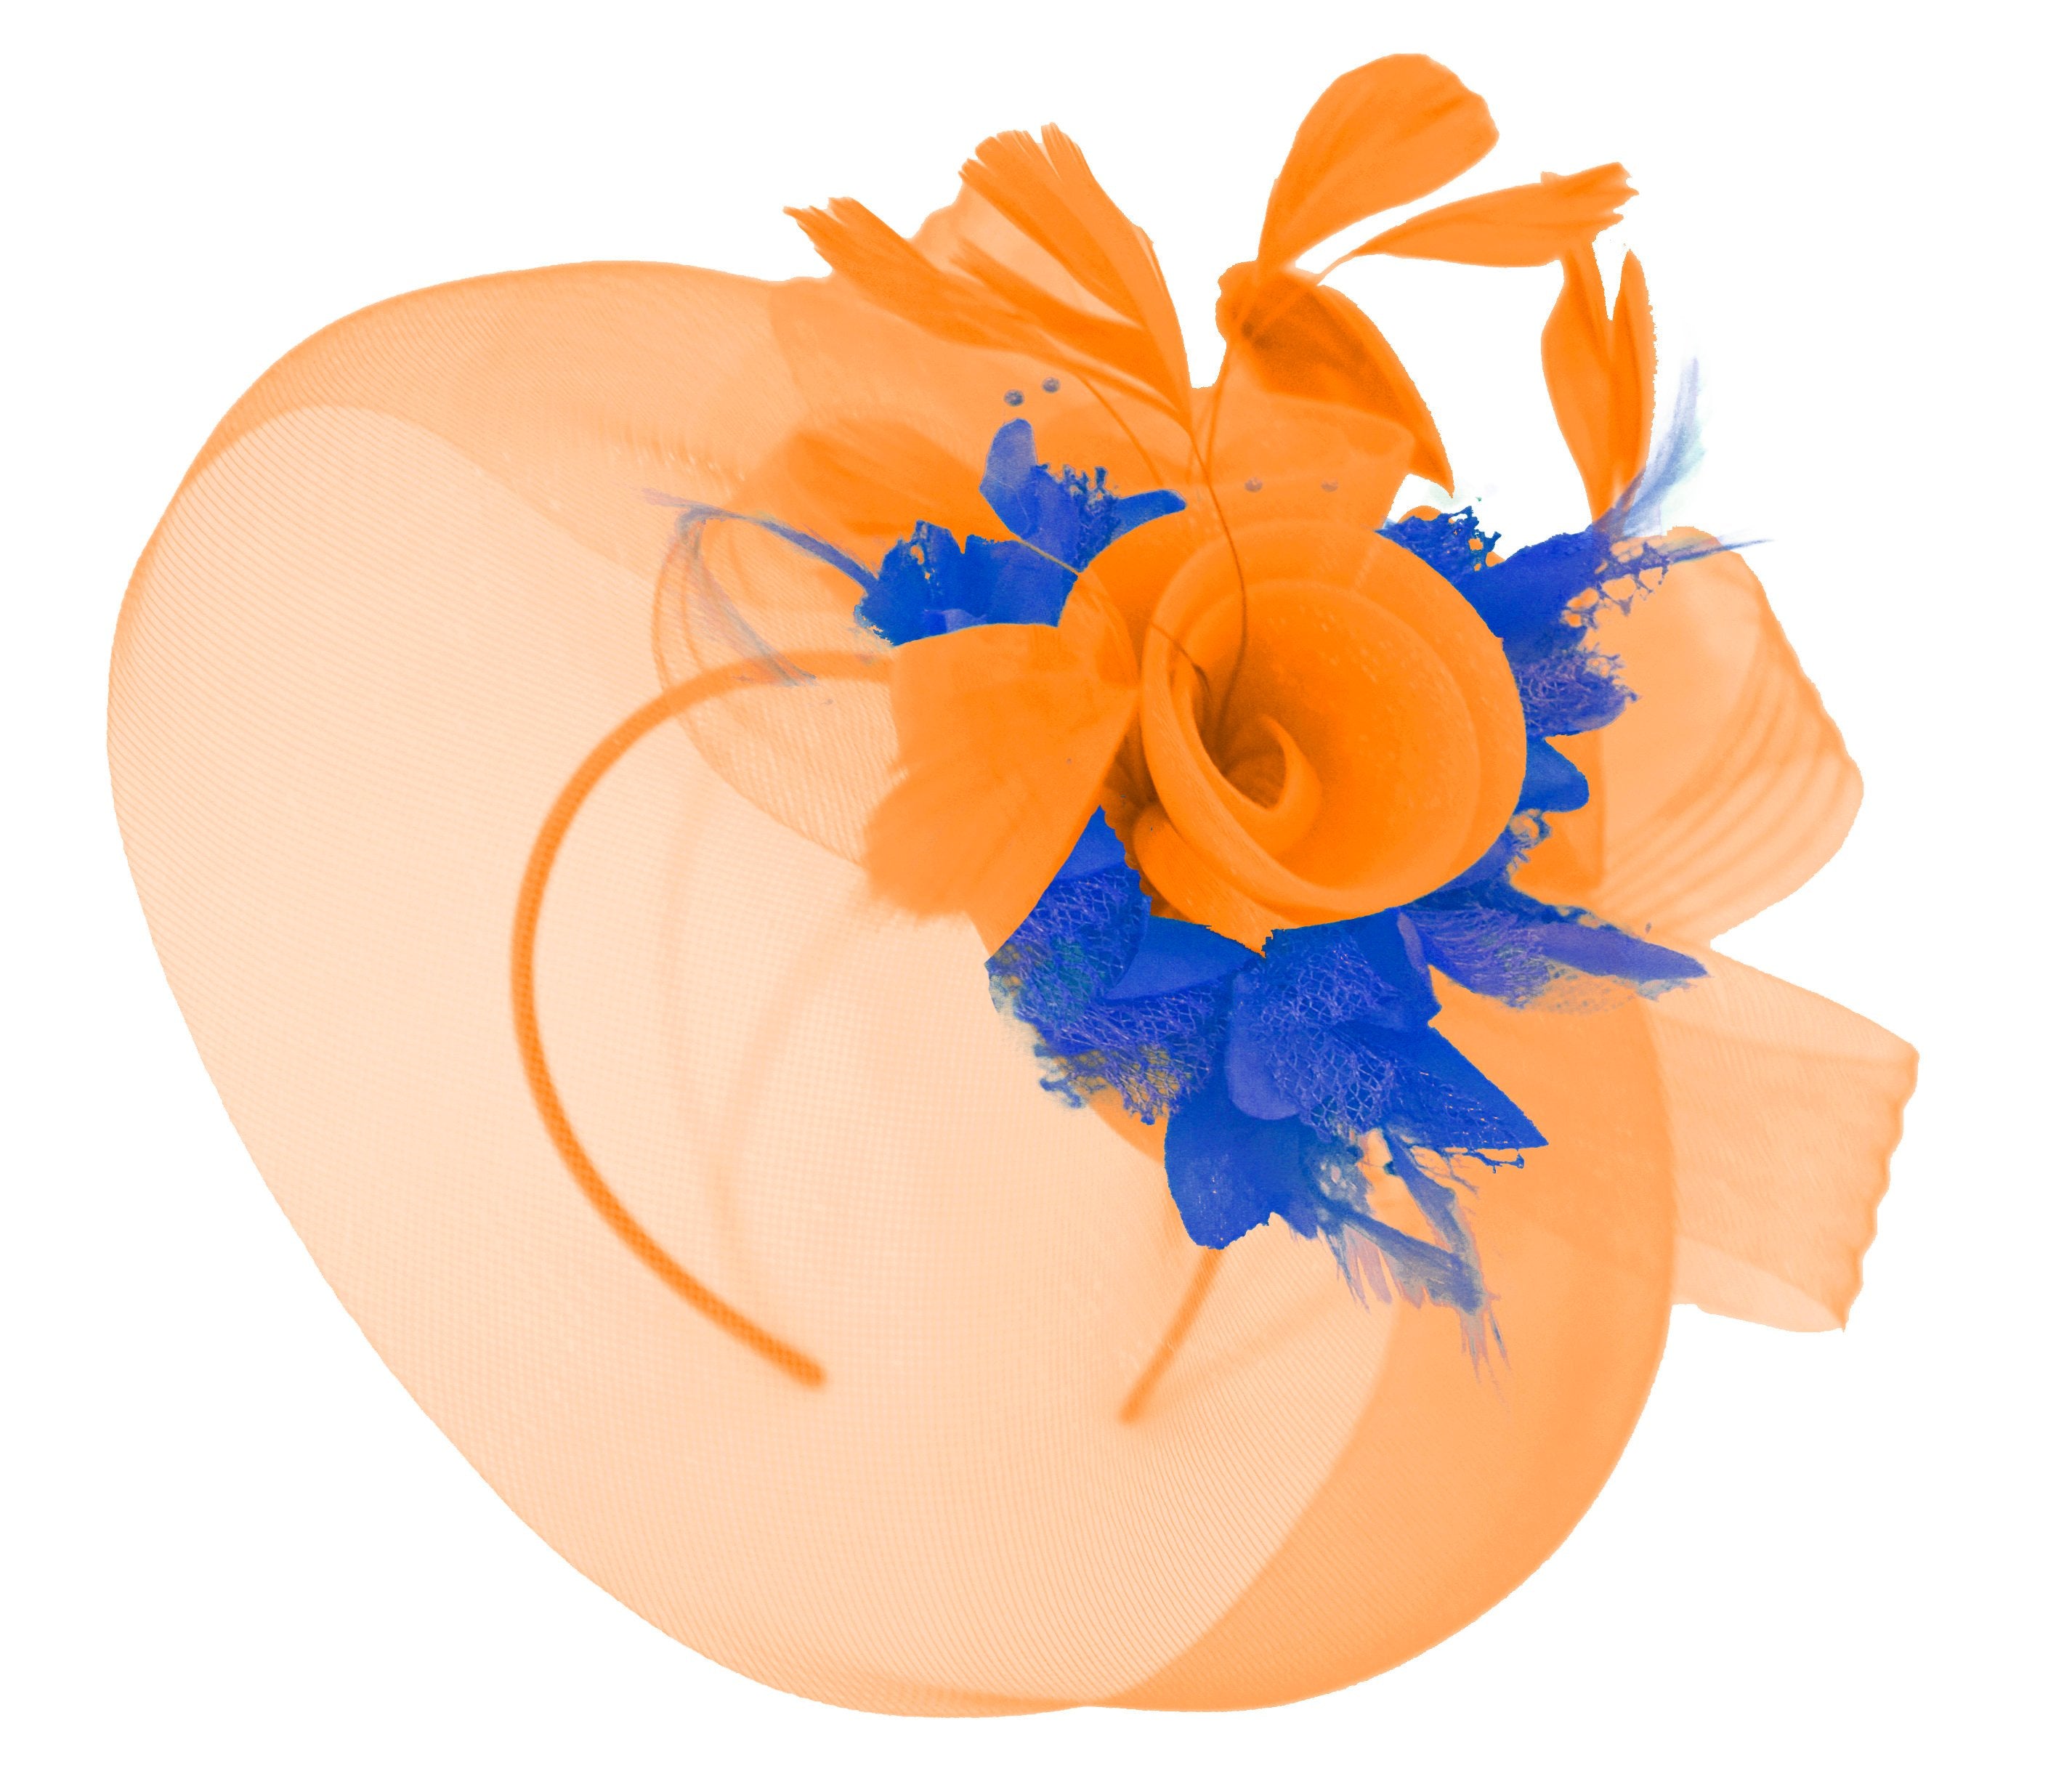 Caprilite Orange and Royal Blue Fascinator Hat Veil Net Hair Clip Ascot Derby Races Wedding Headband Feather Flower